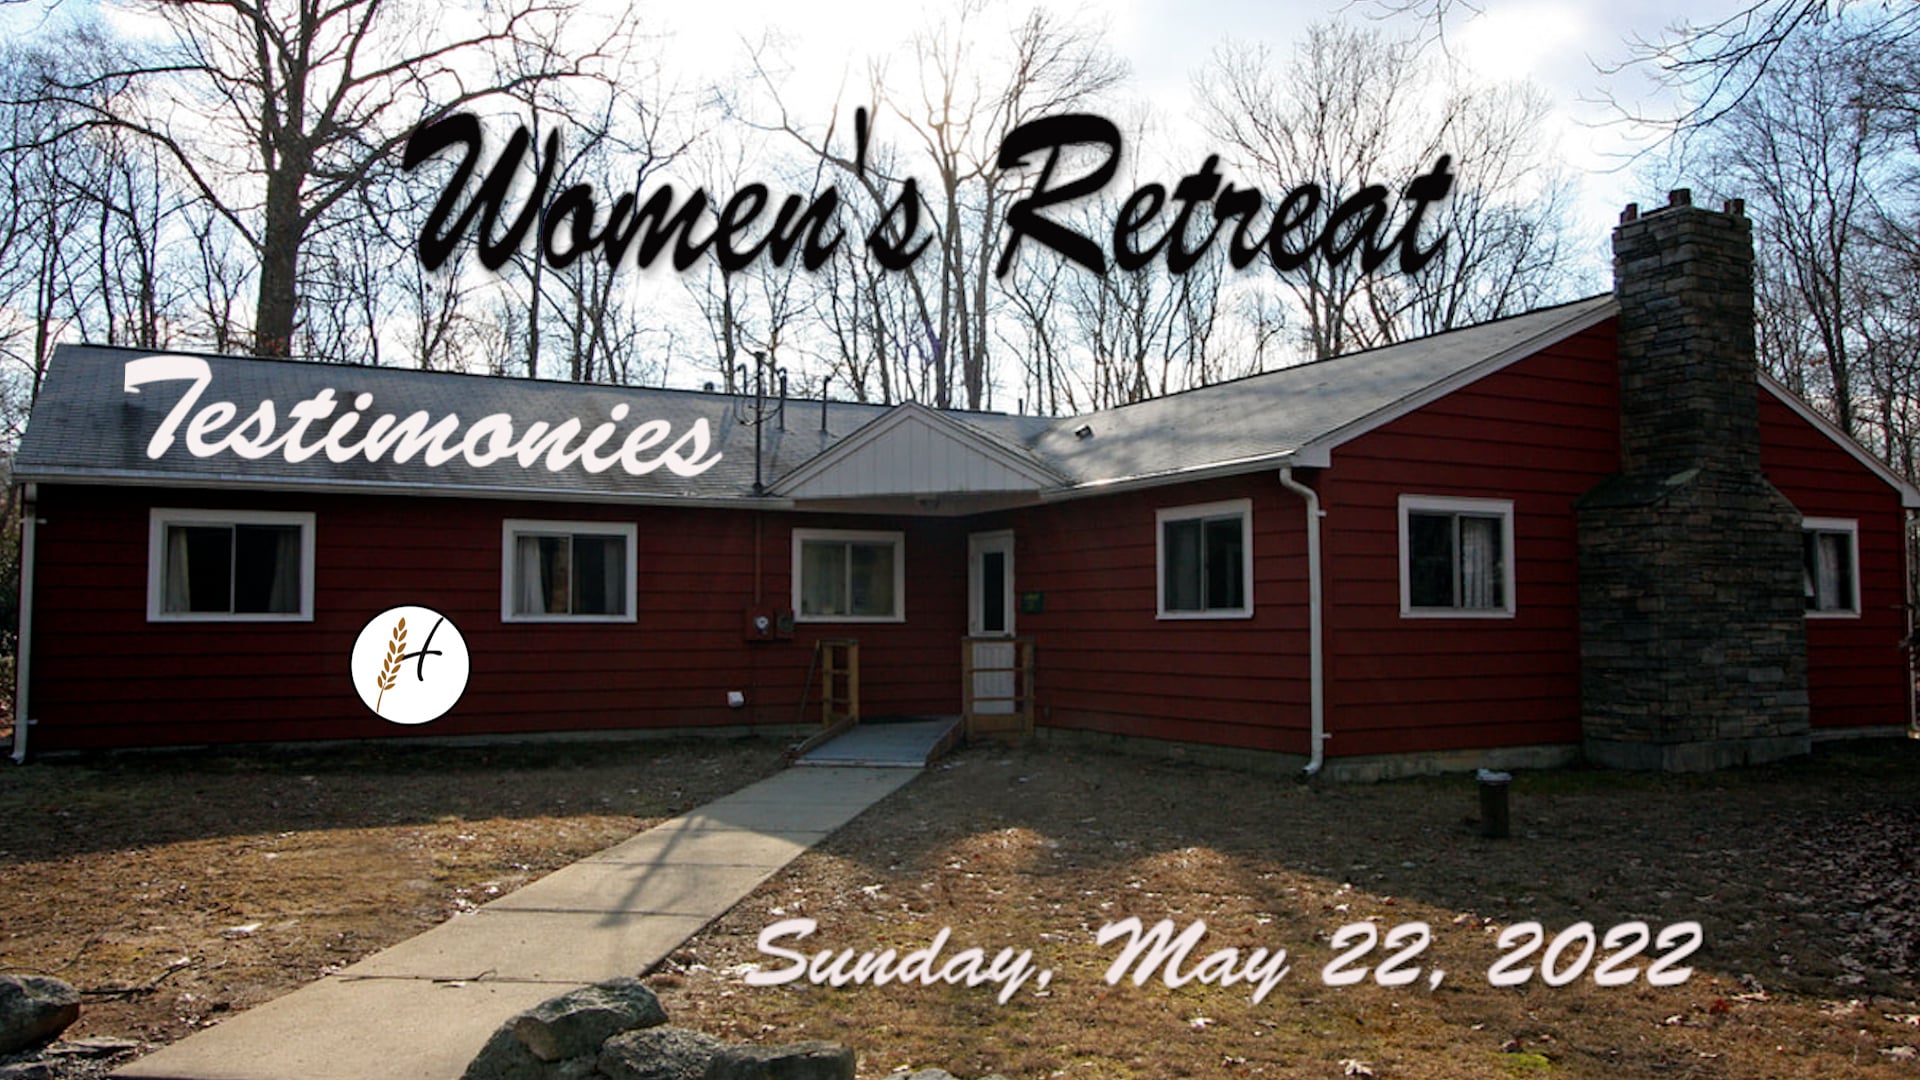 2022/05/22  Womens Retreat Testimonies